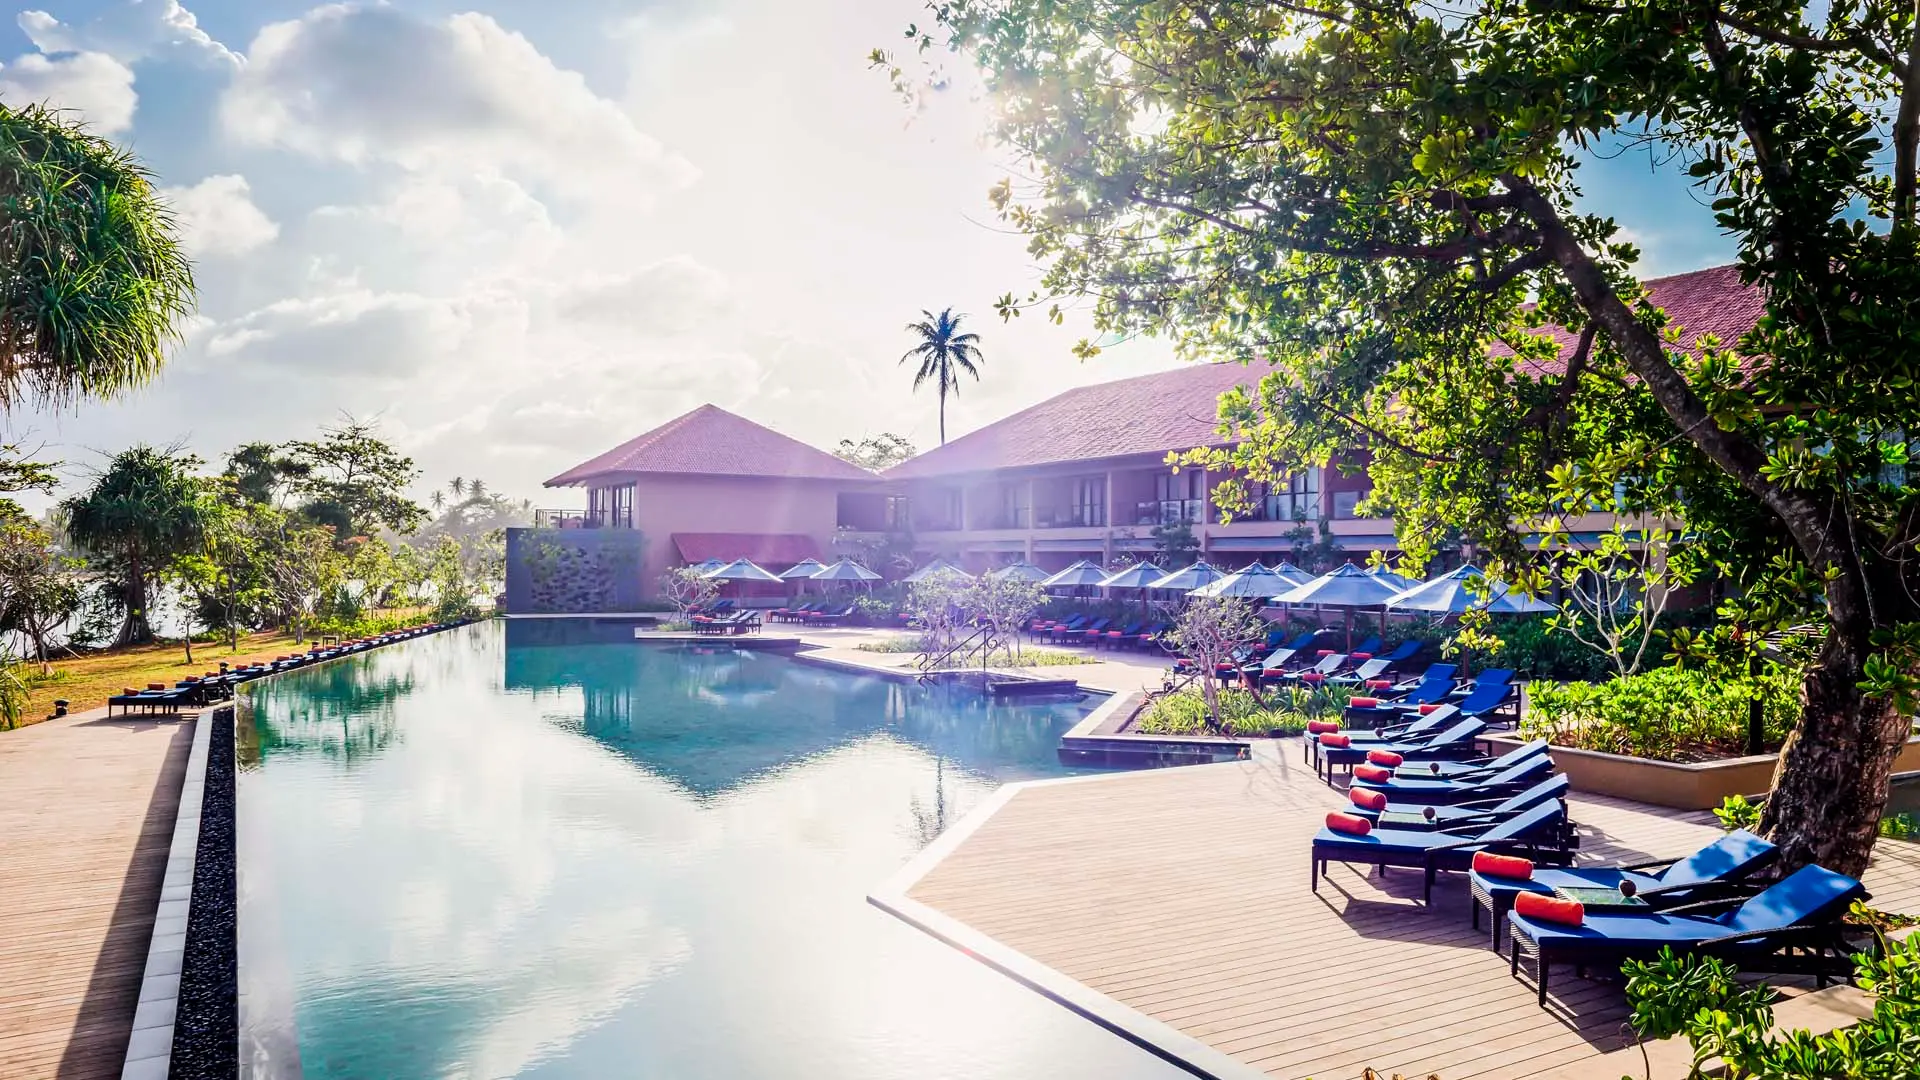 Hotel review Service & Facilities' - Anantara Kalutara Resort - 0